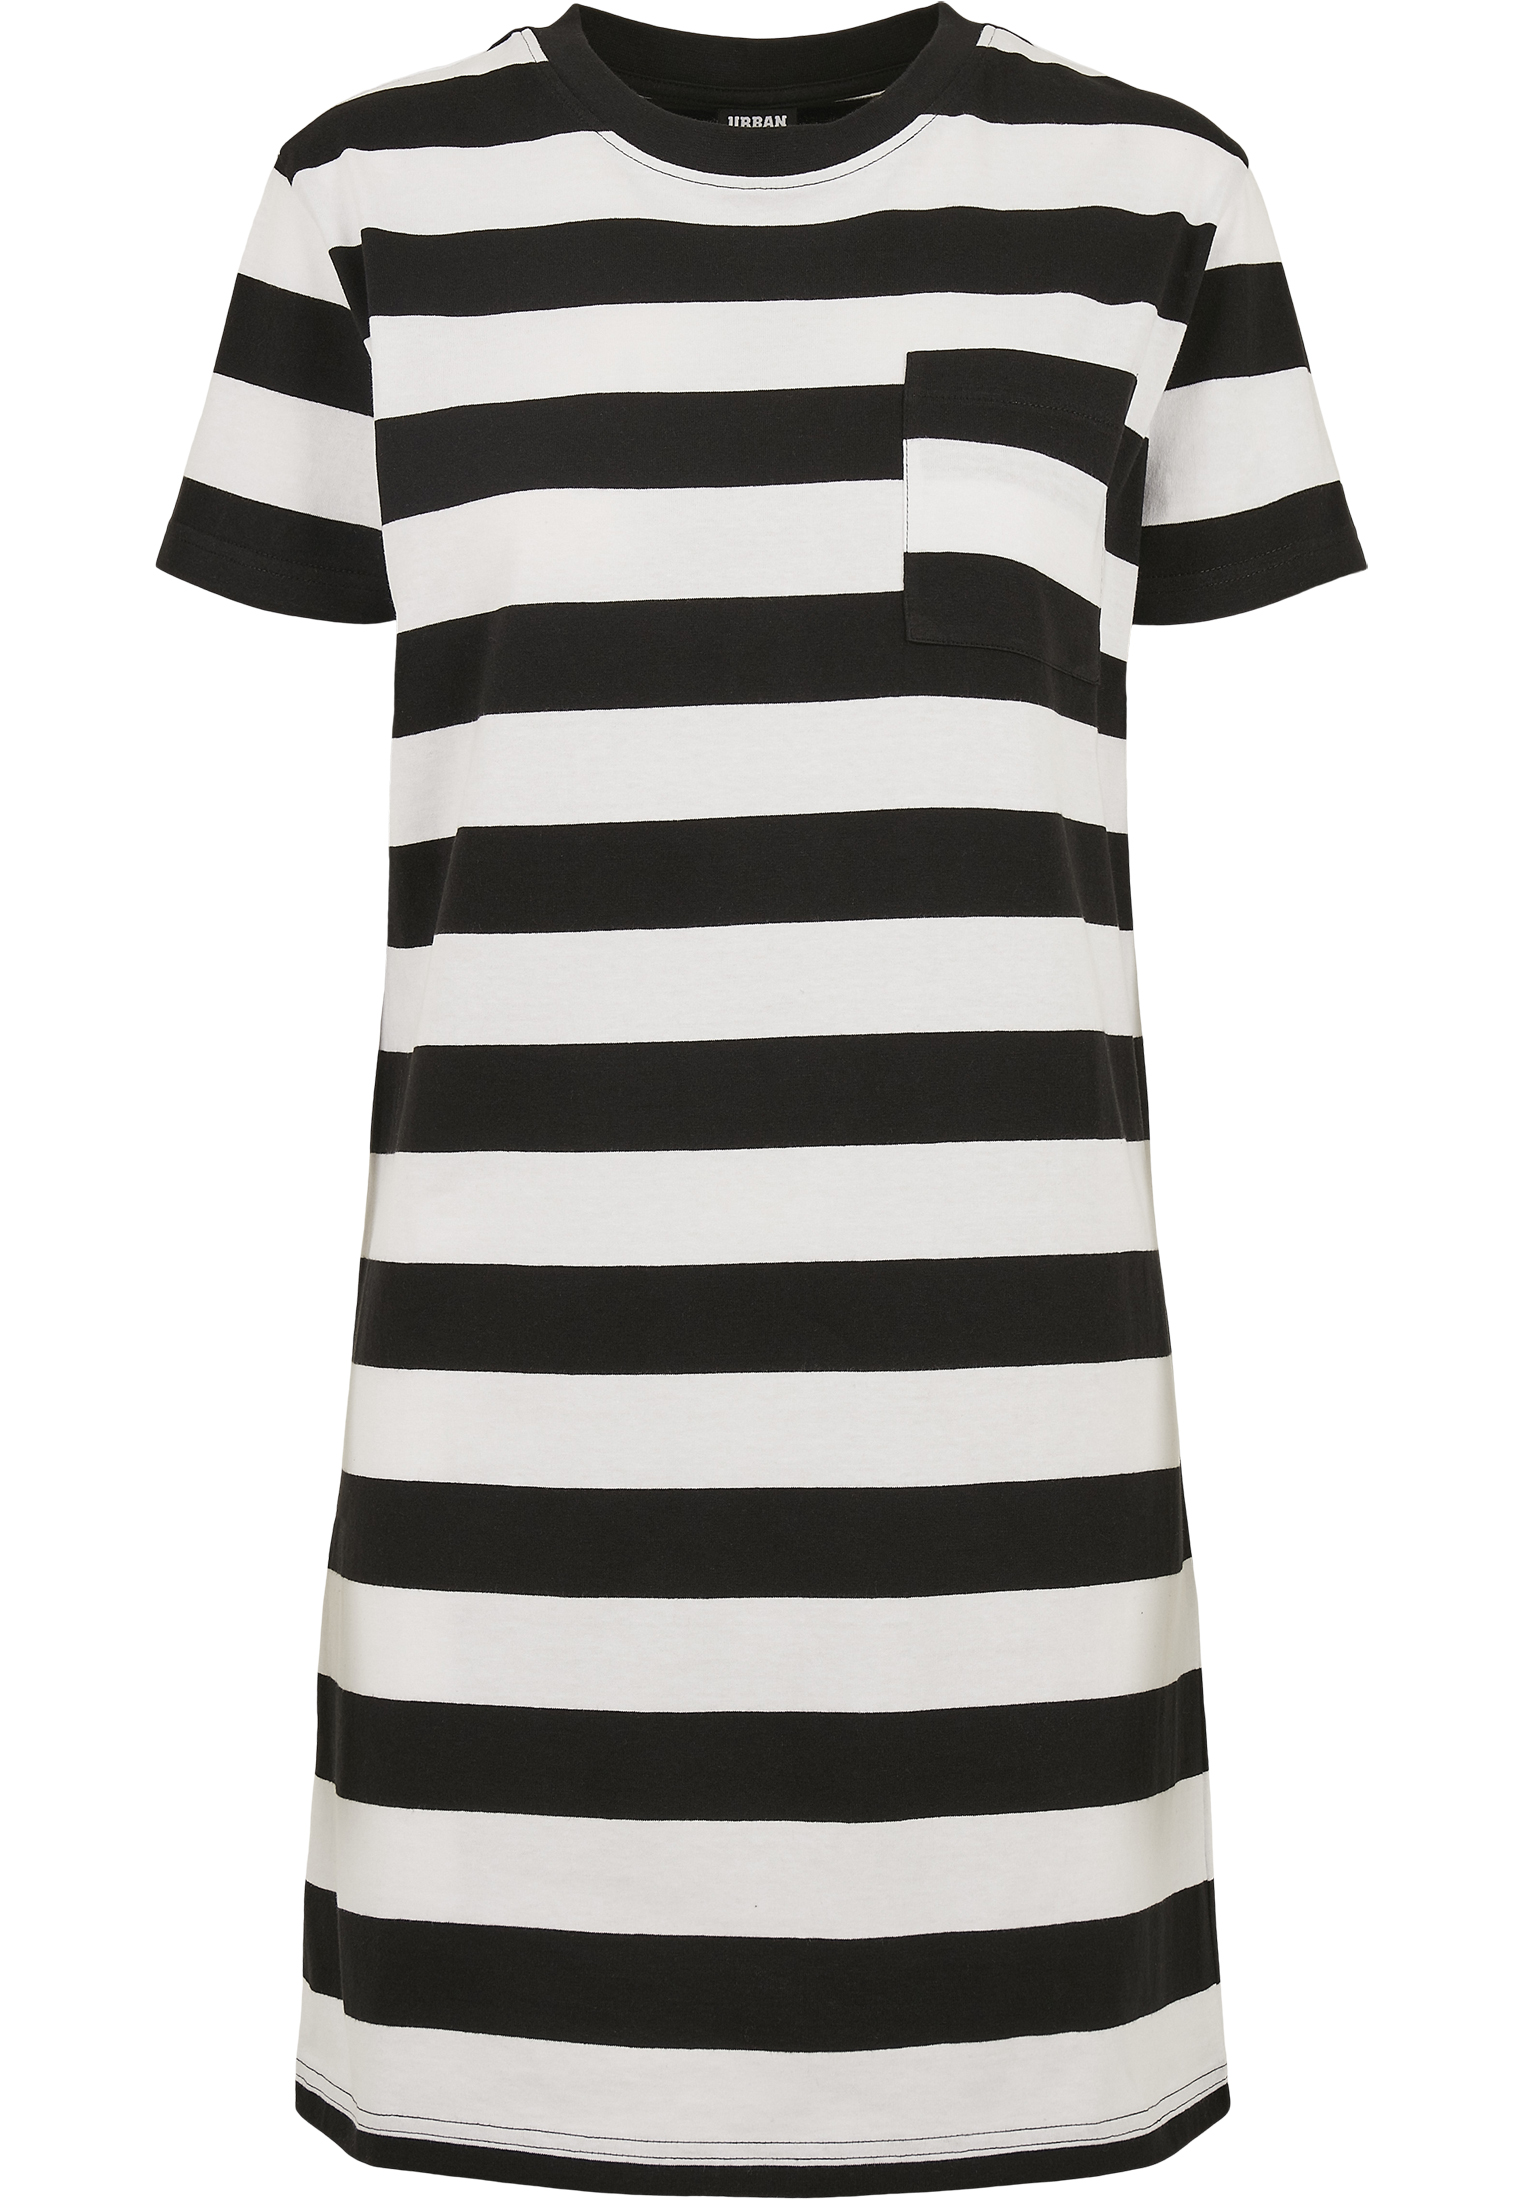 Curvy Ladies Stripe Boxy Tee Dress in Farbe black/white